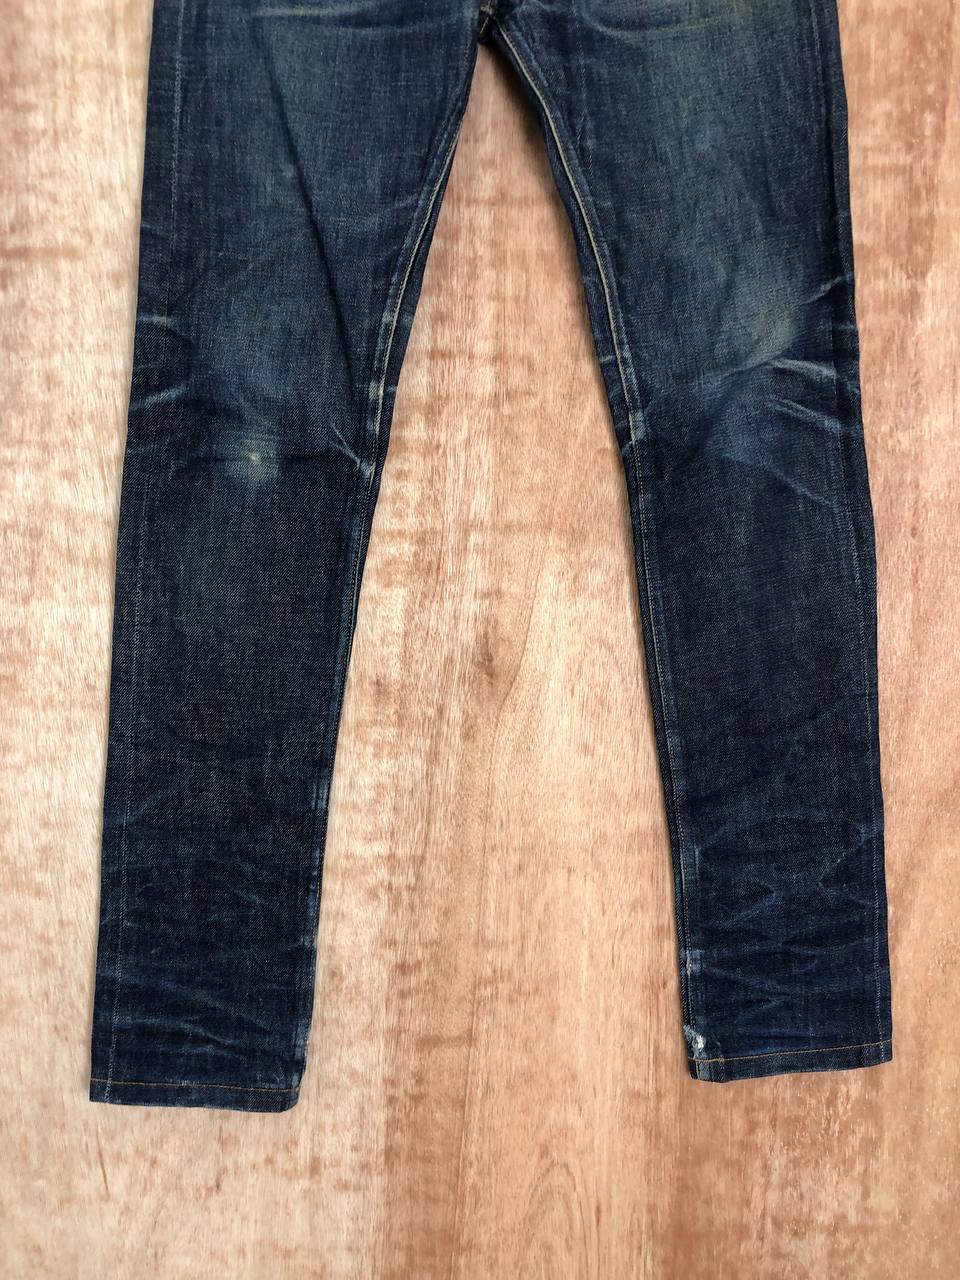 APC Petit Standard Jeans Distressed Selvedge - 4